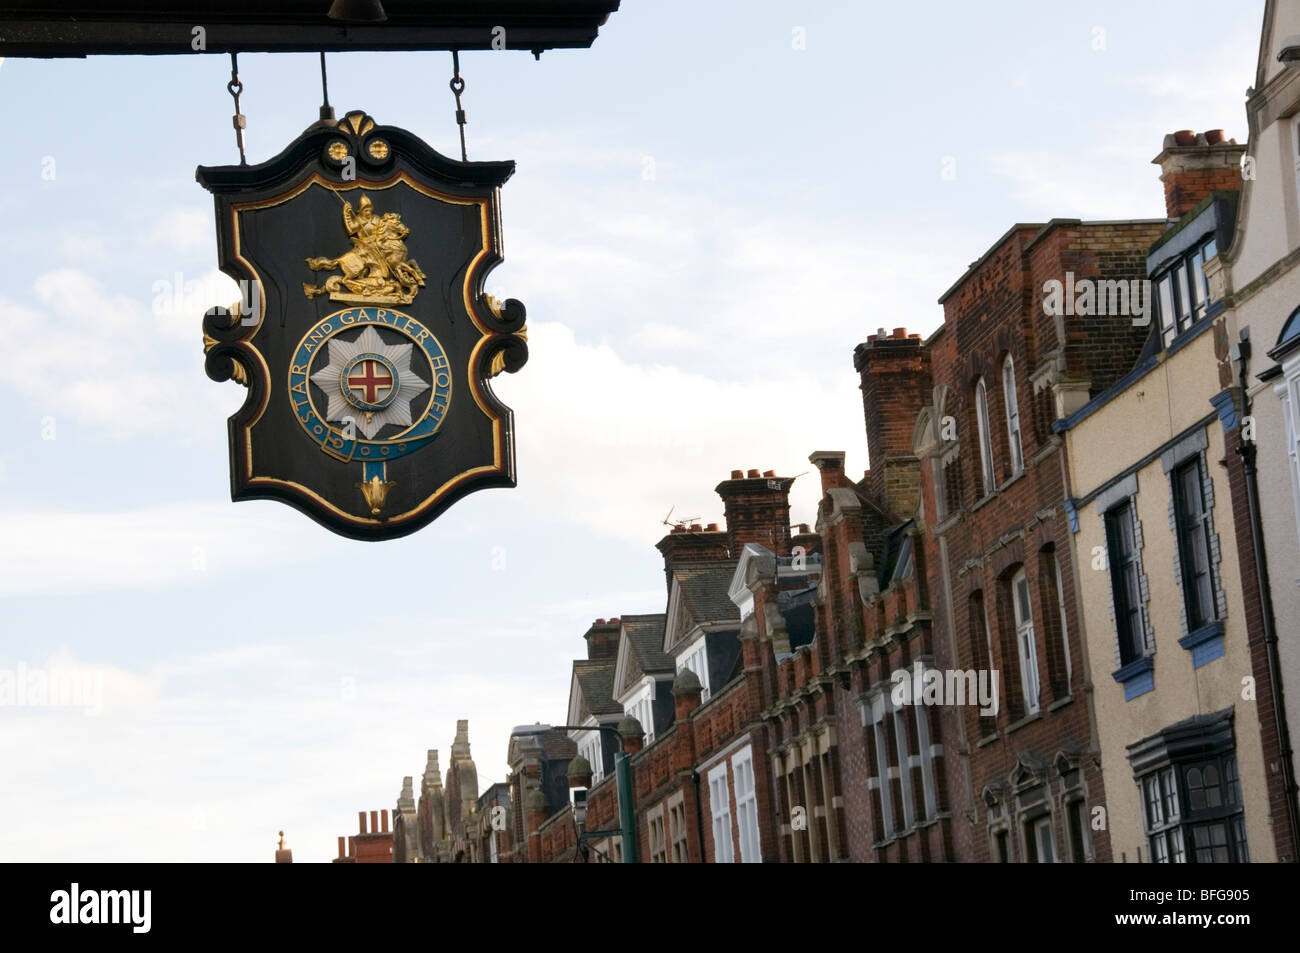 Star and Garter pub sign, Bromley, Kent, England Stock Photo